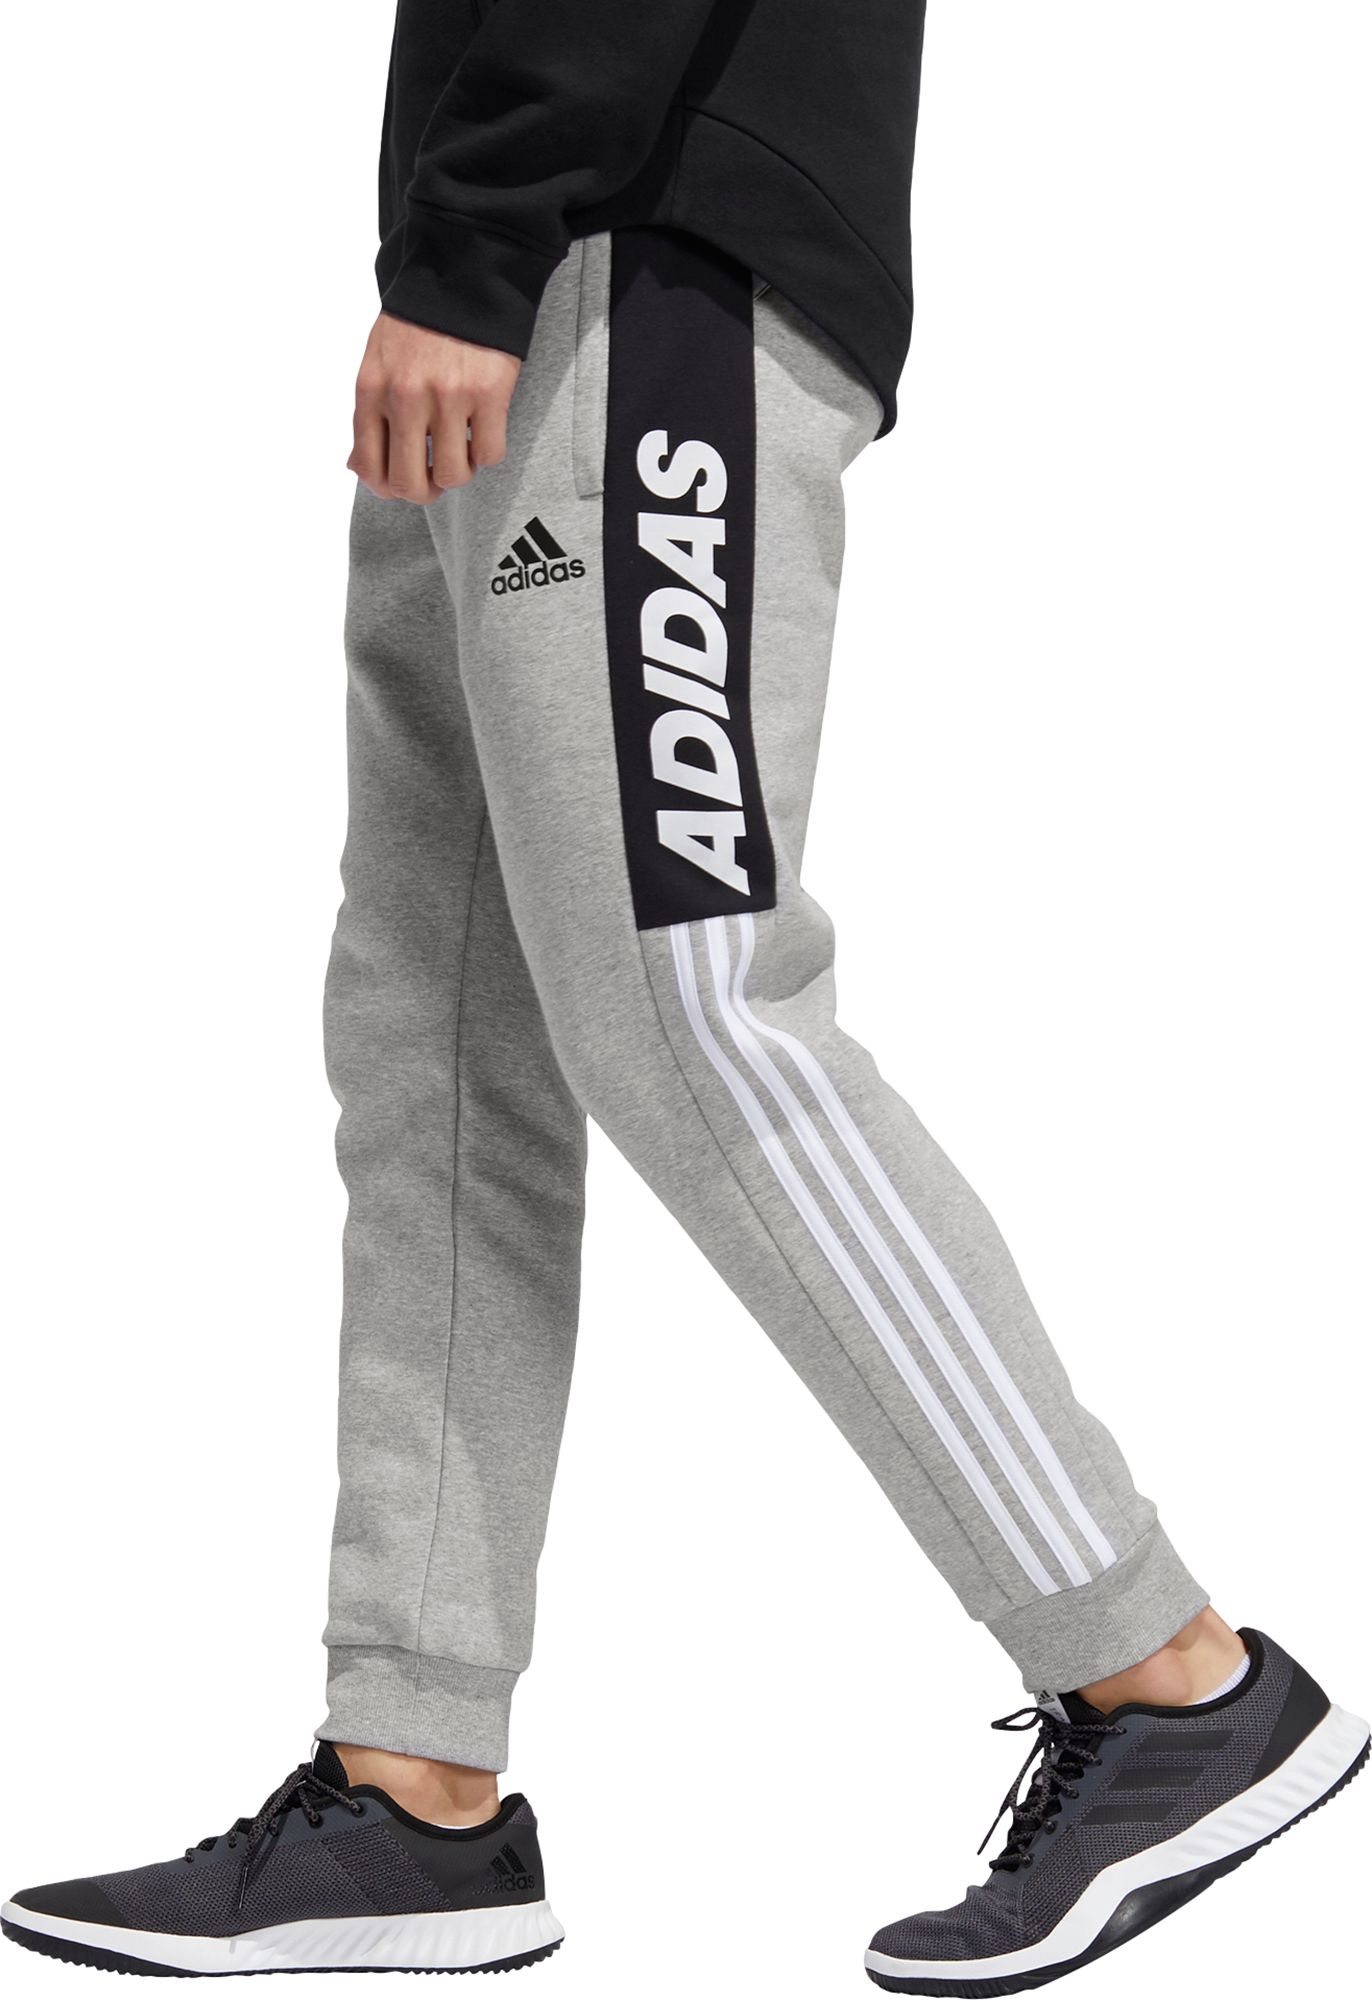 Adidas mens jogger dicks